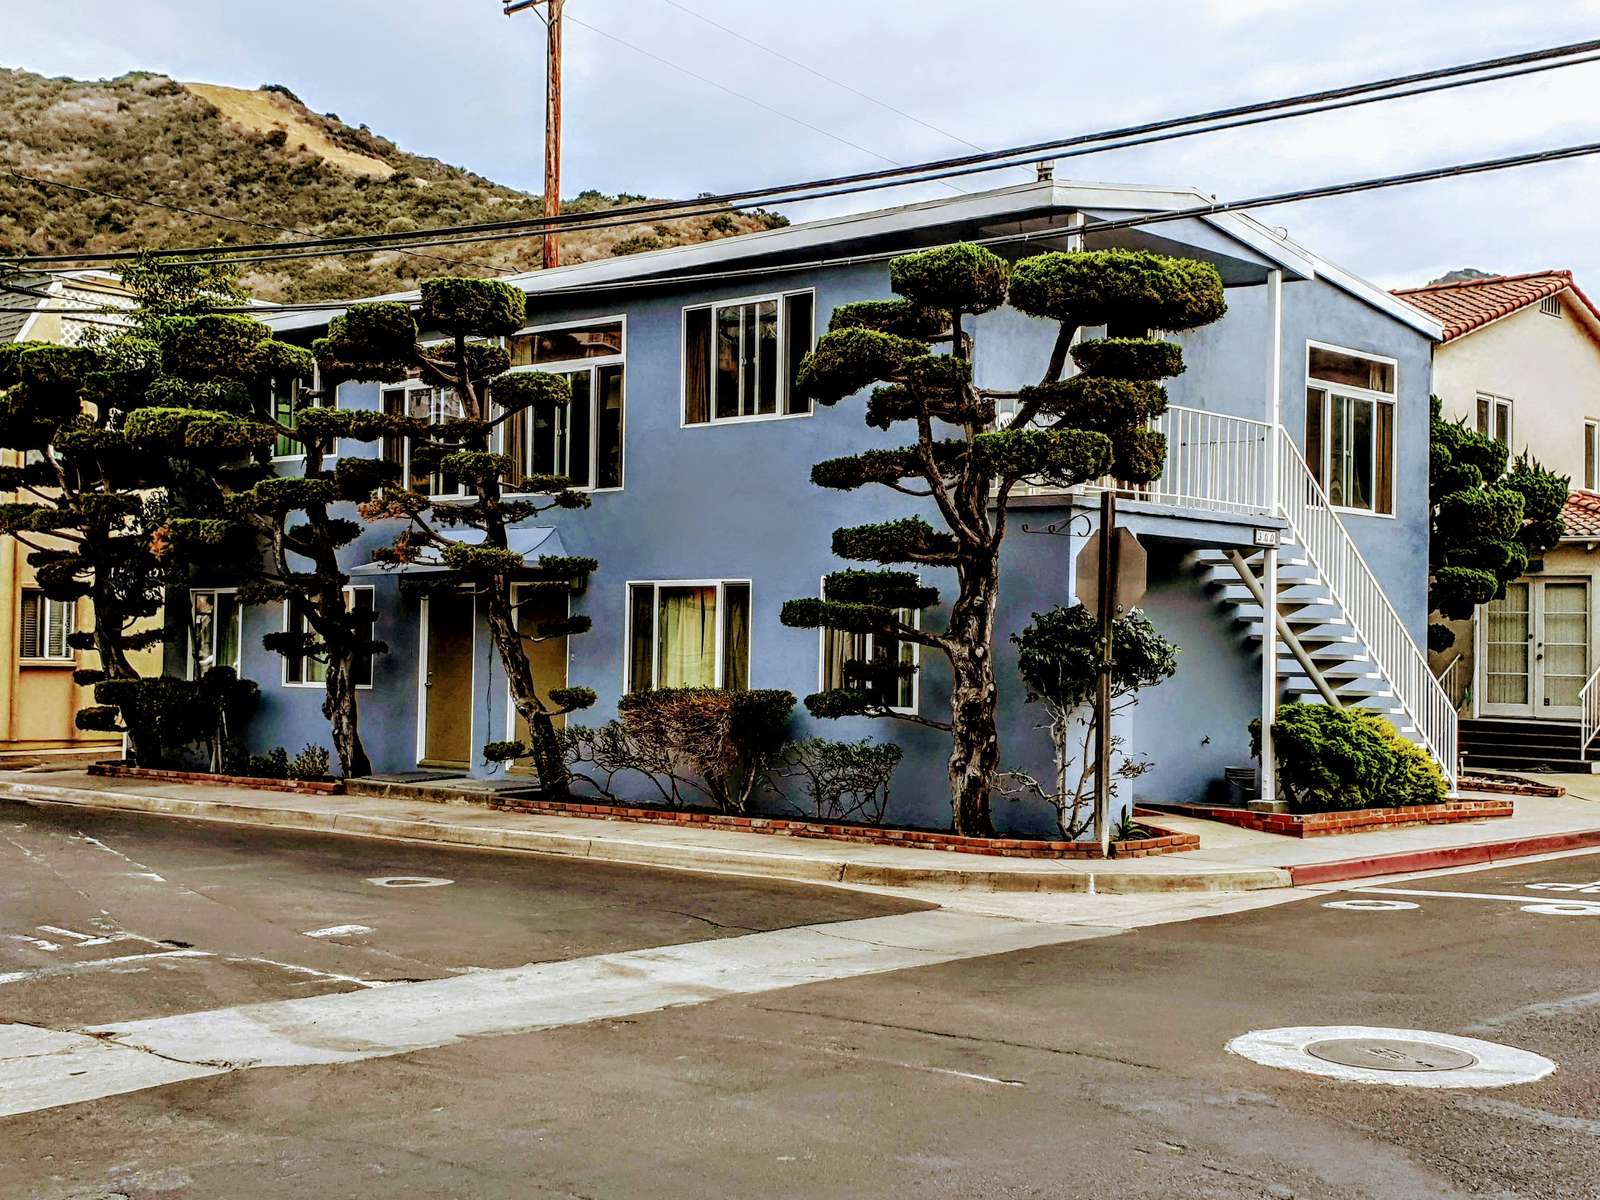 Ilha de Santa Catalina, Califórnia, EUA puzzle online